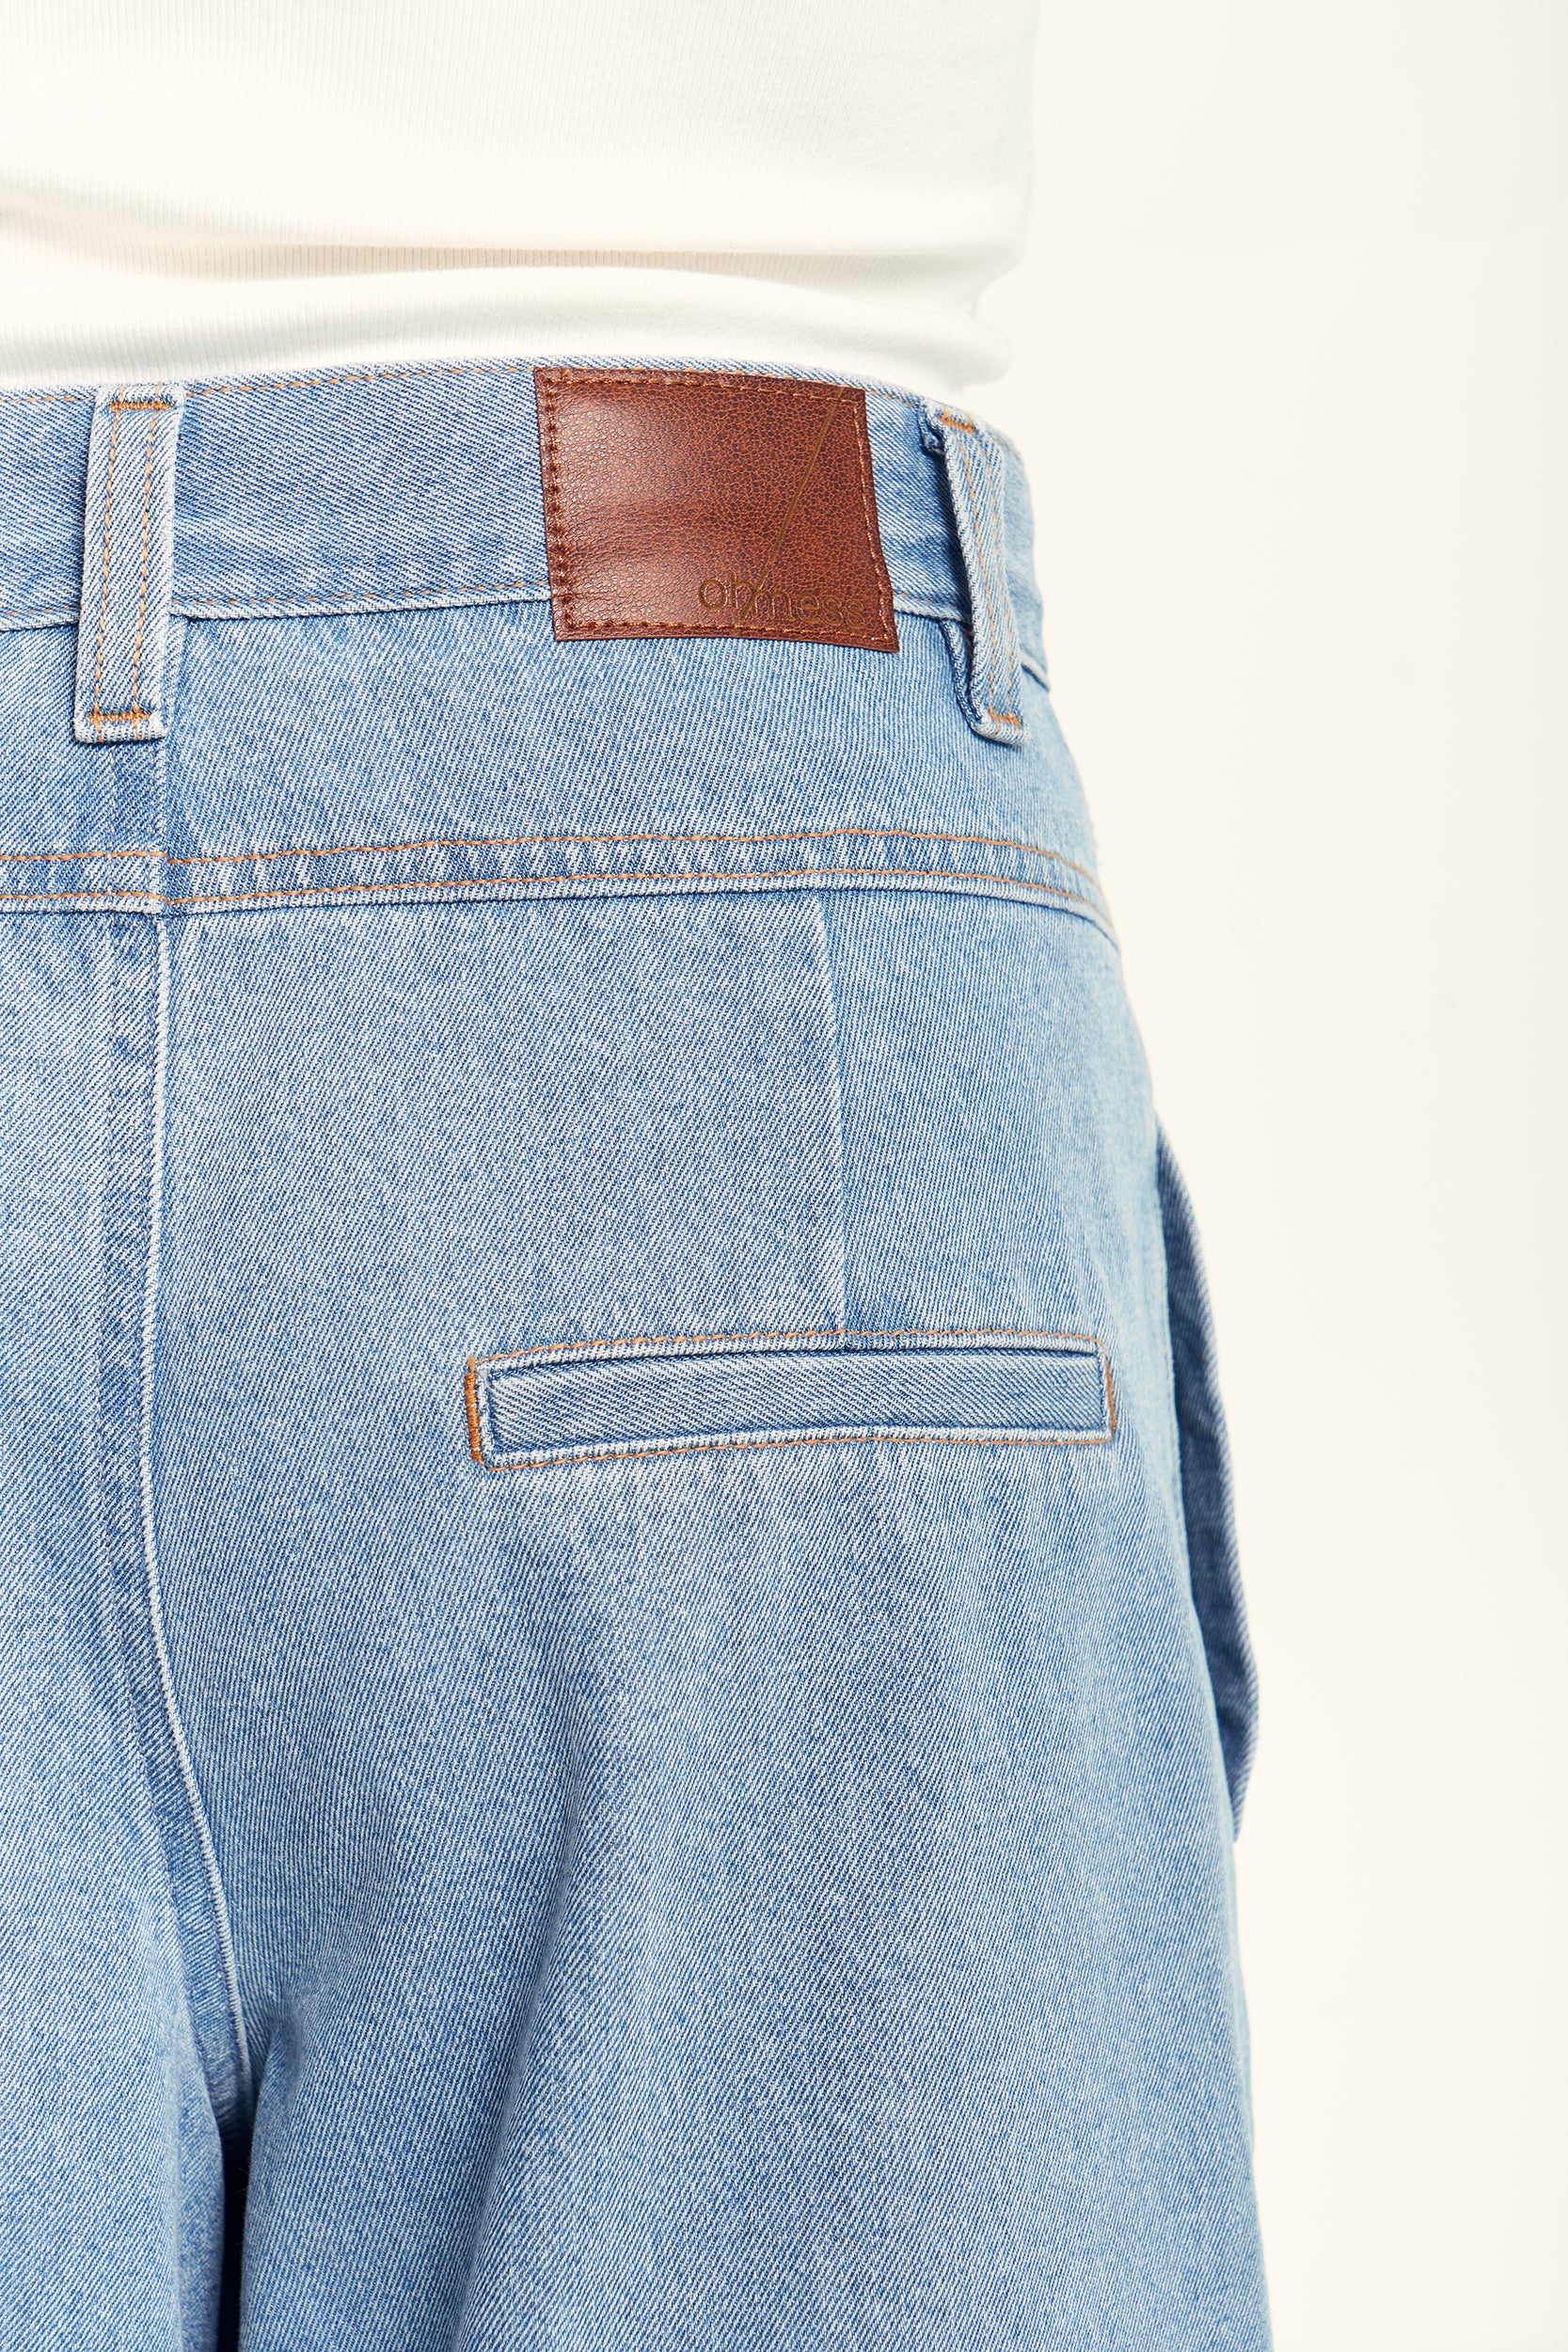 Spodnie Moonlight Jeans